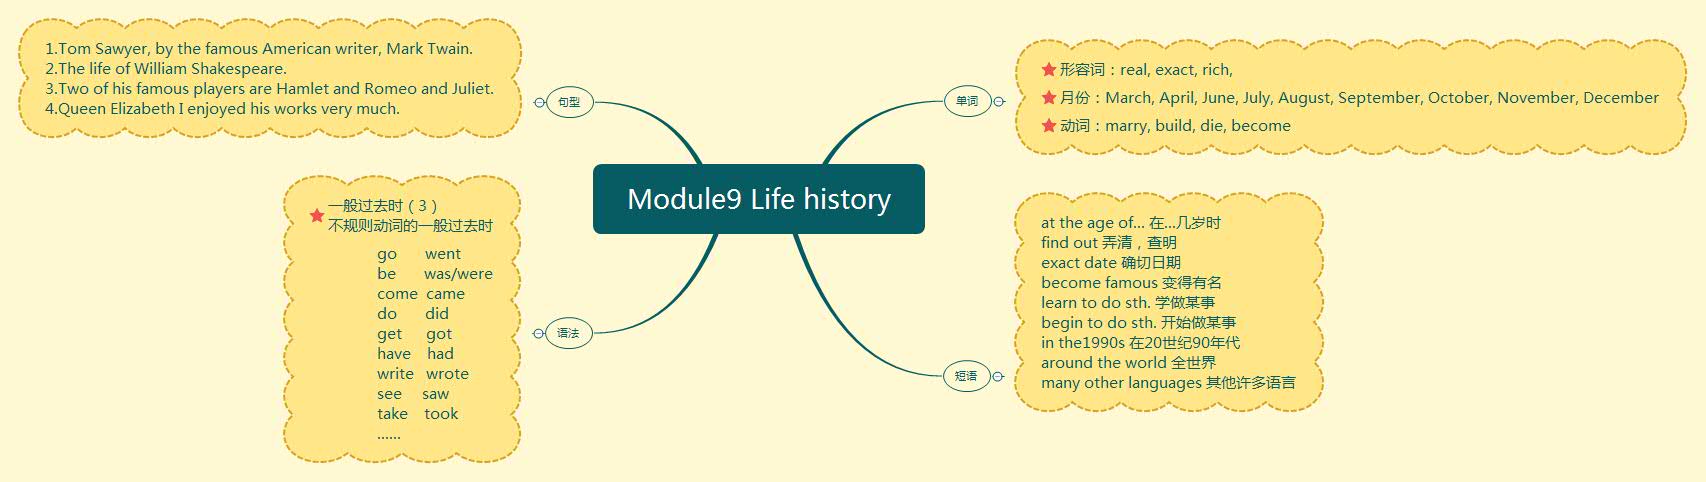 Module9 Life history.jpg